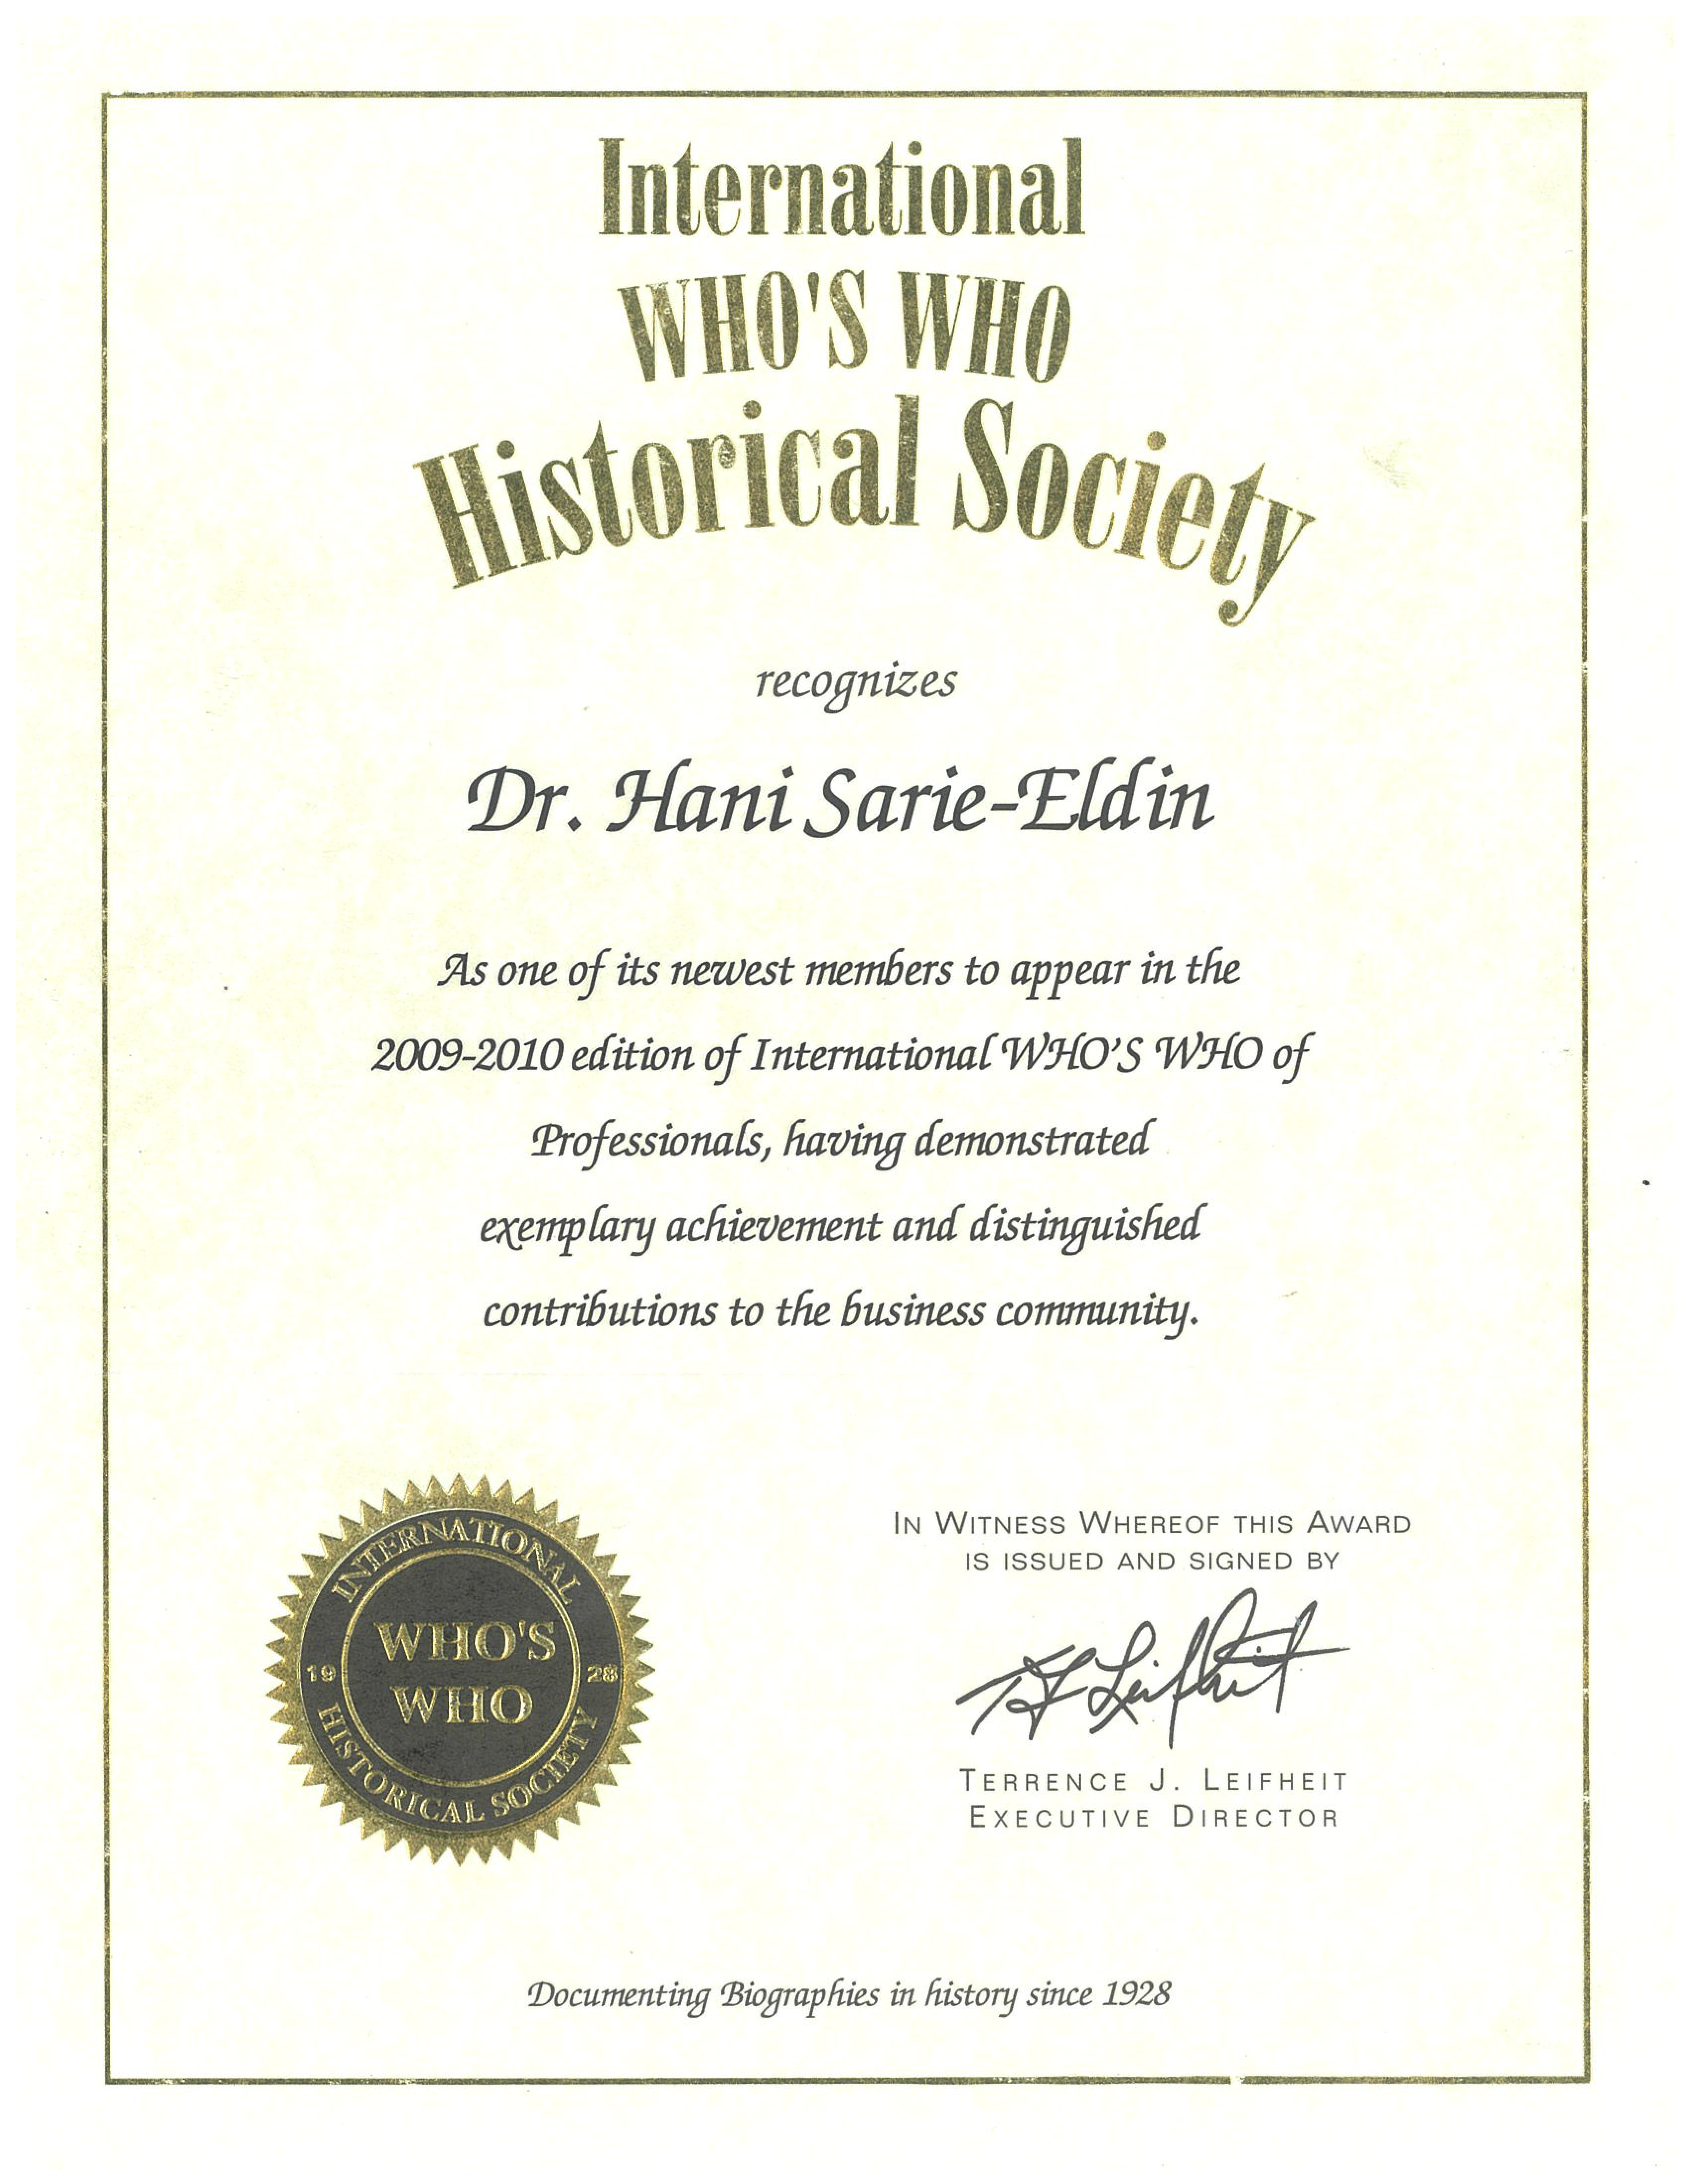 International Who's Who (Historical Society) 2009-2010